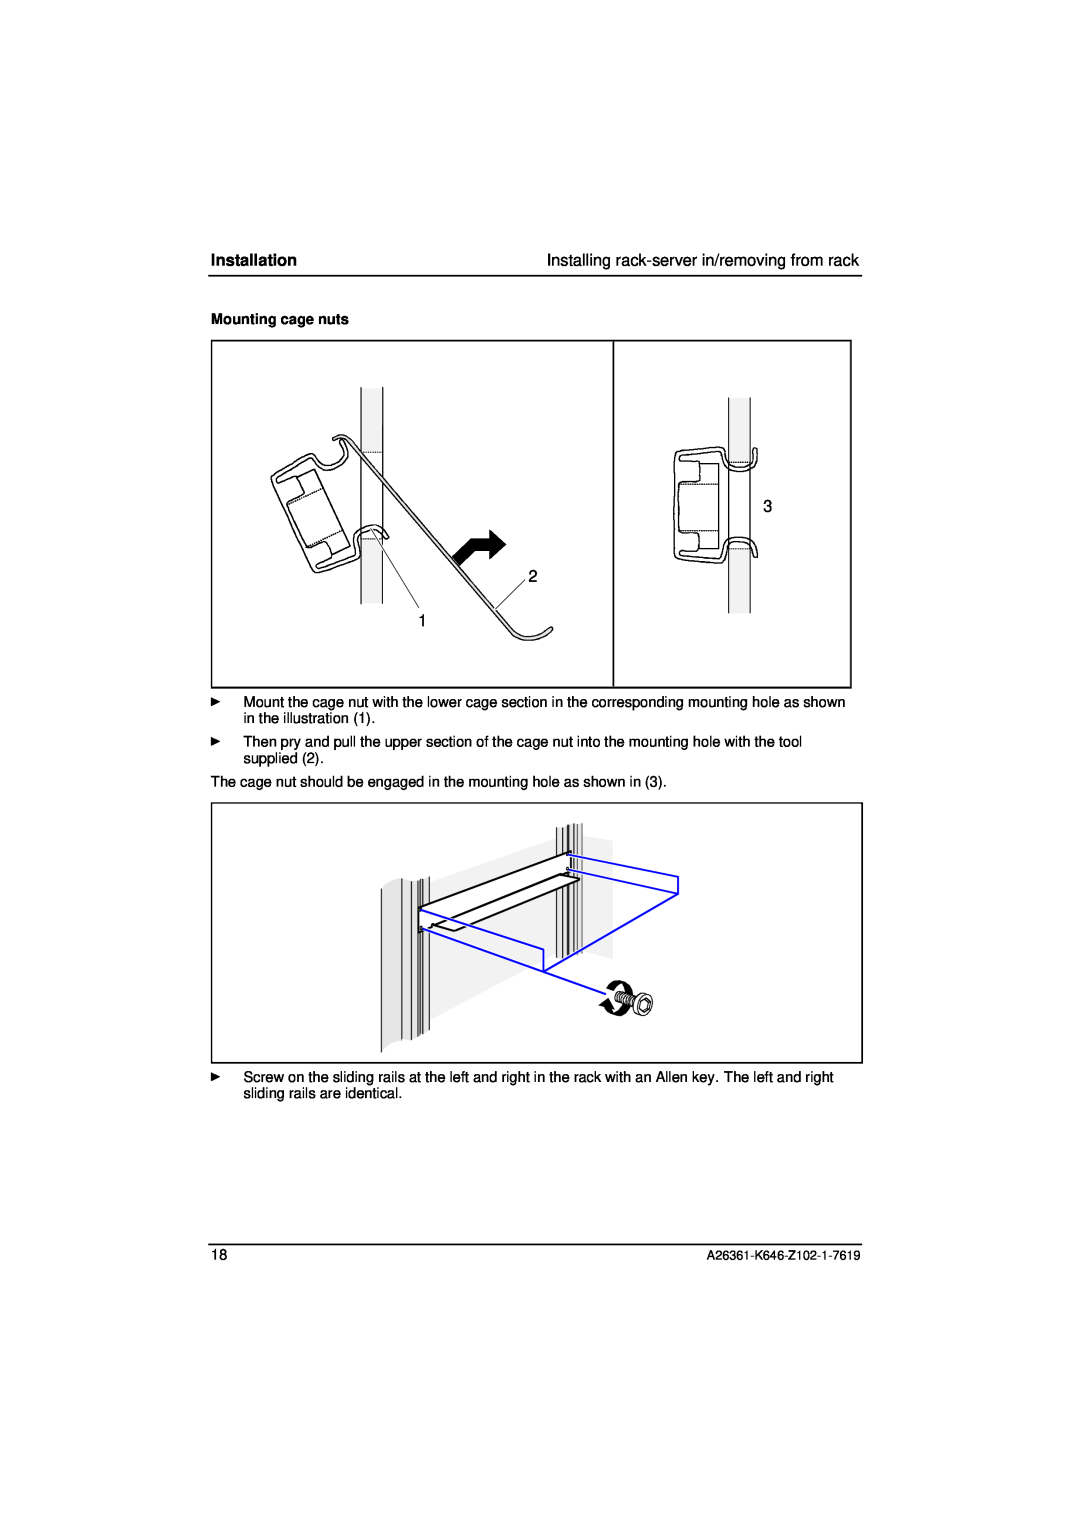 Fujitsu B120 manual Mounting cage nuts, Installation 